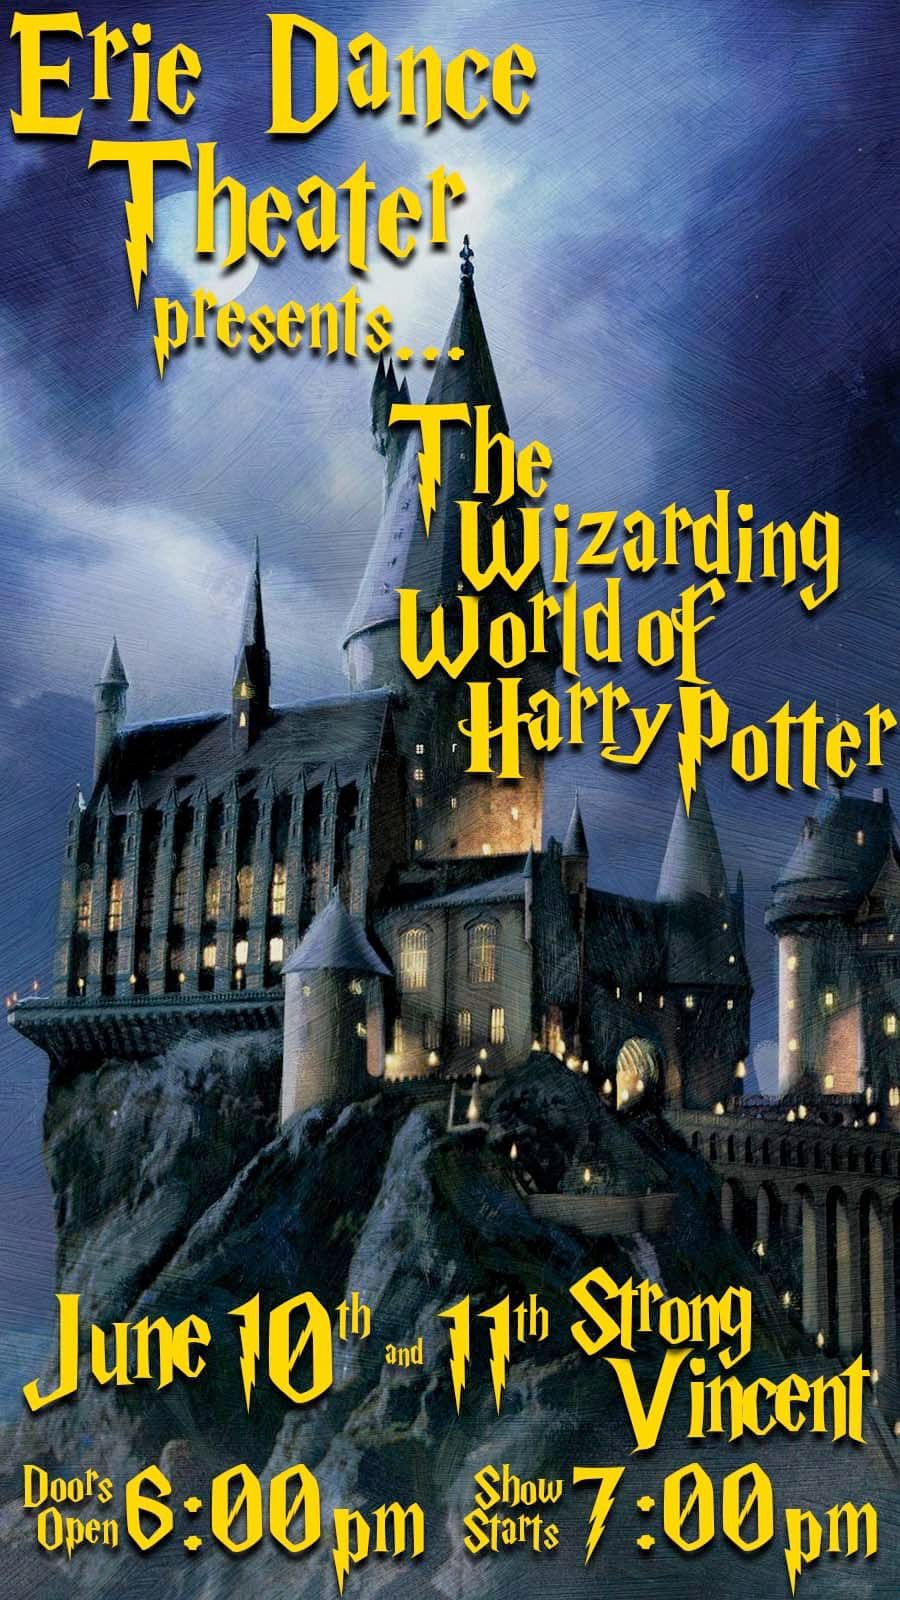 "The Wizarding World of Harry Potter" Dance Recital - Erie Dance Theater